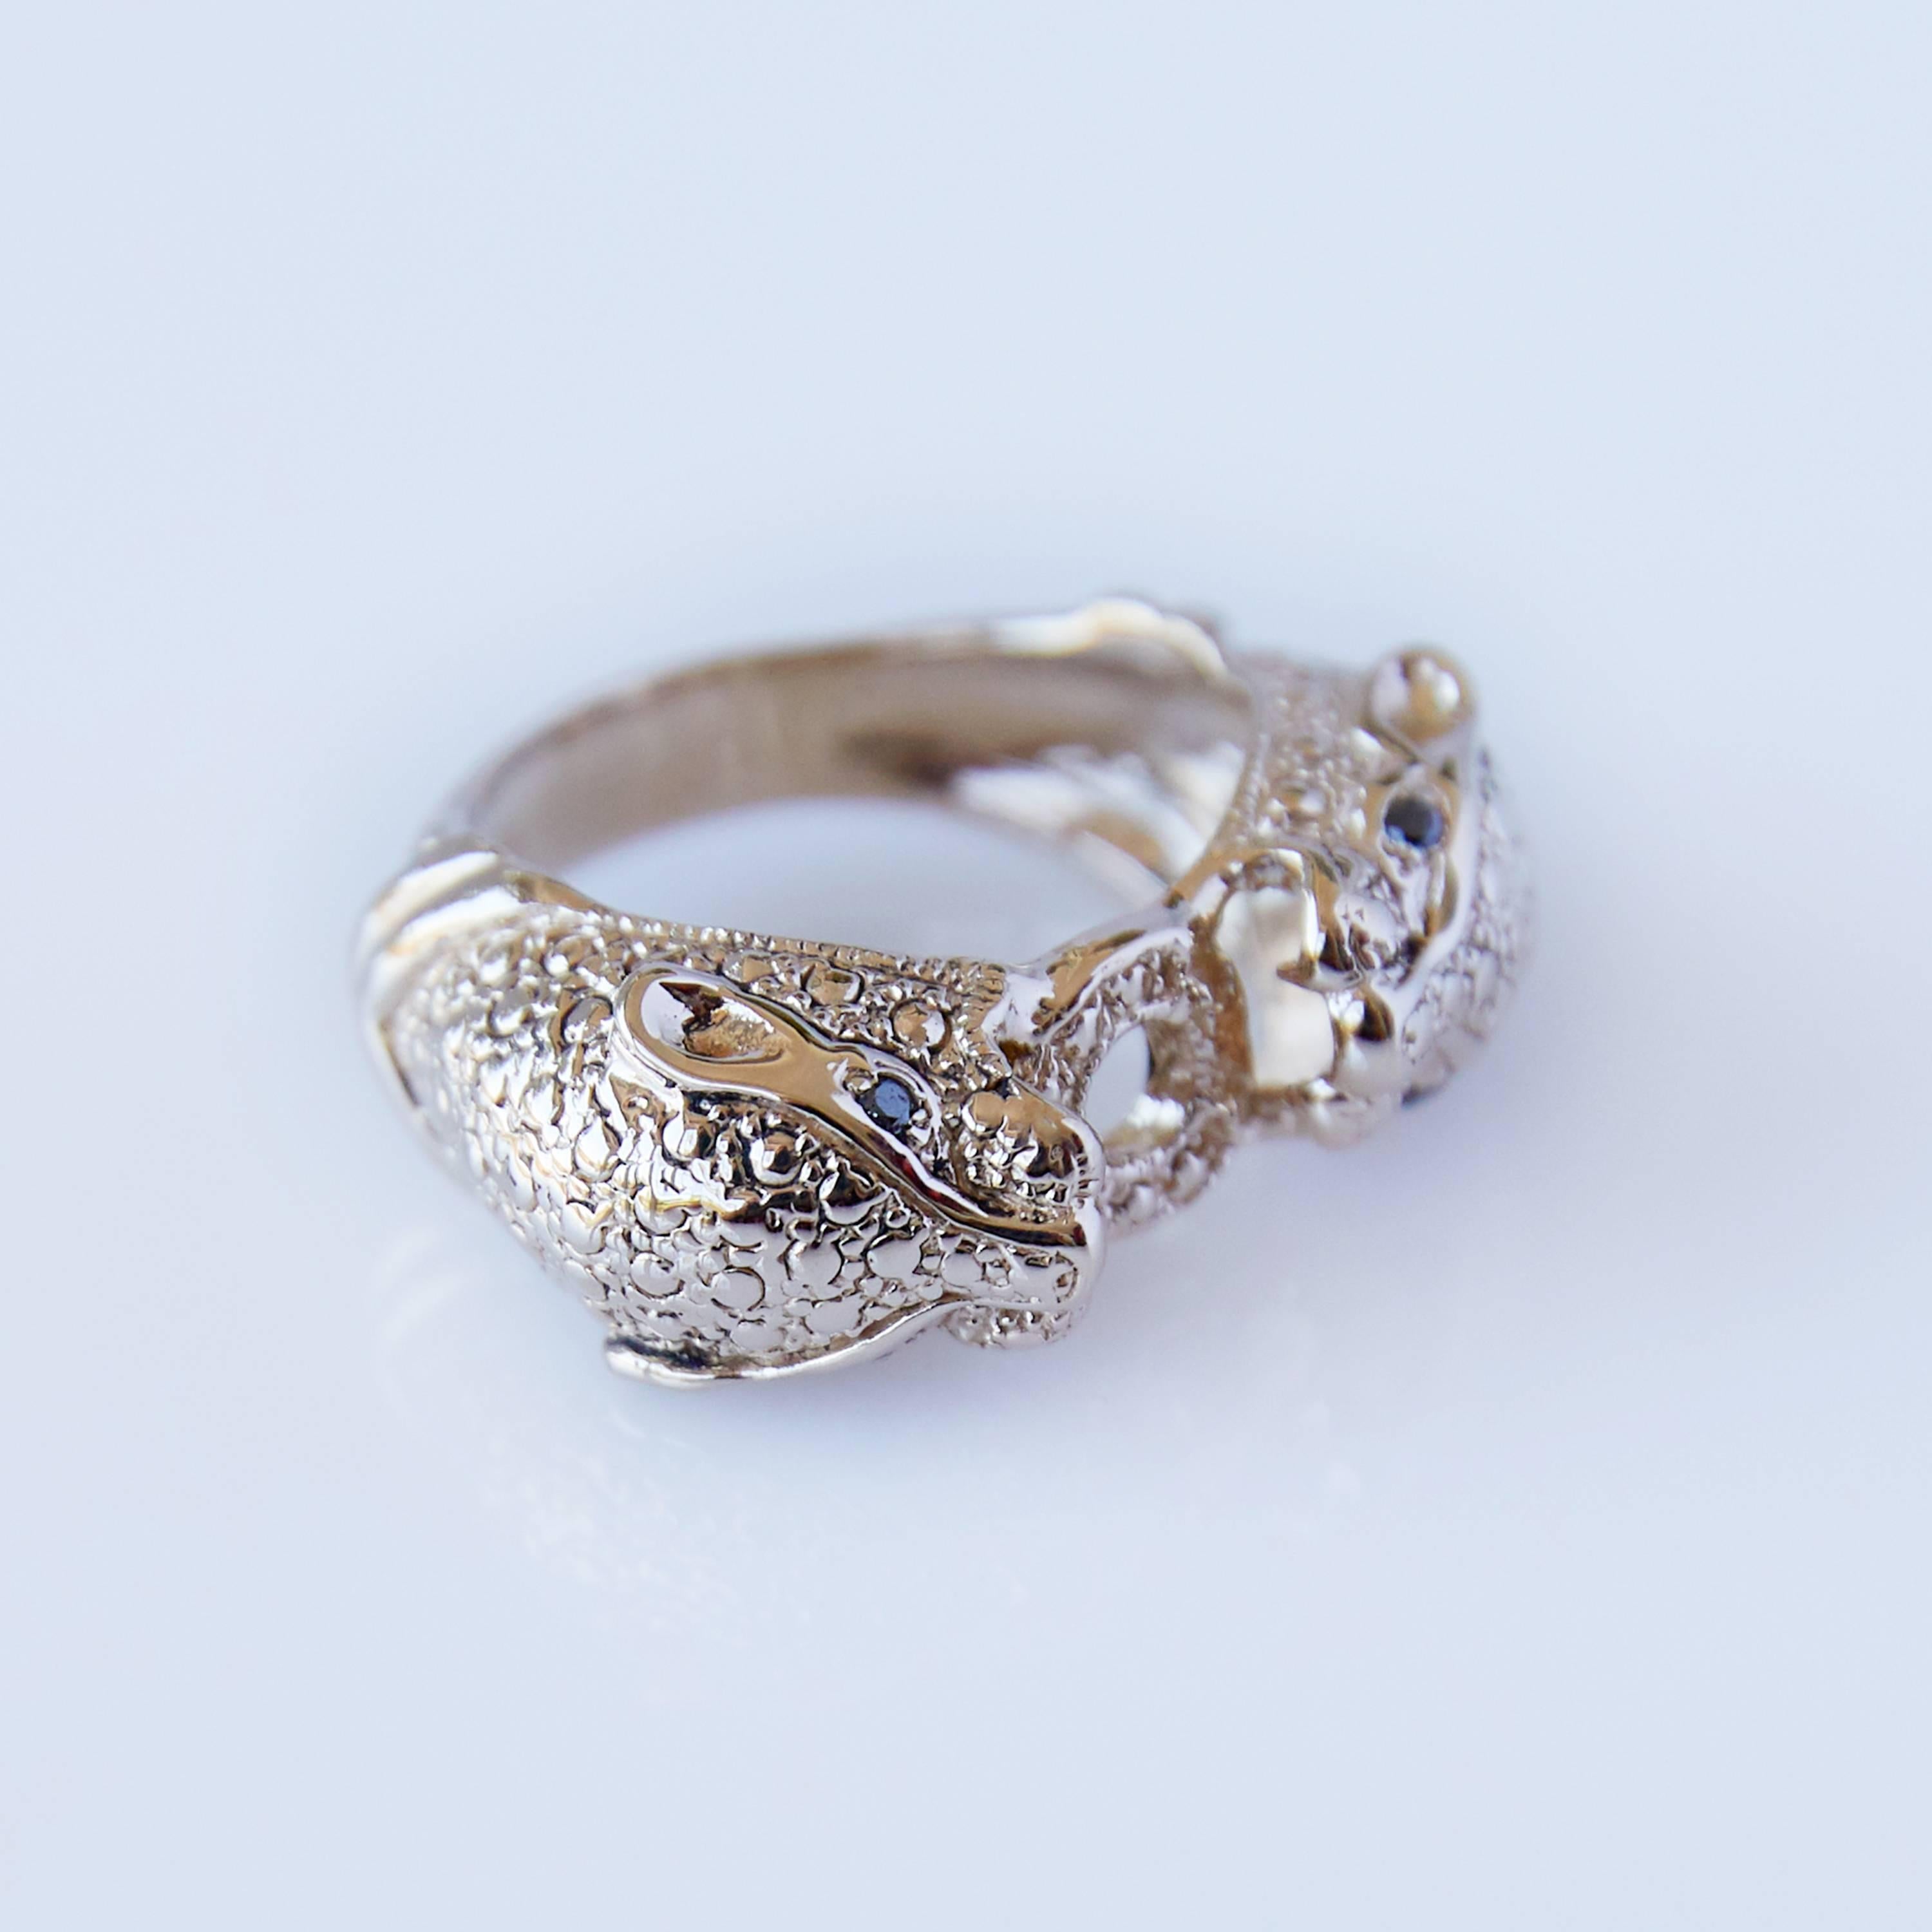 Black Diamond Jaguar Ring Gold Animal Jewelry J Dauphin

J DAUPHIN 